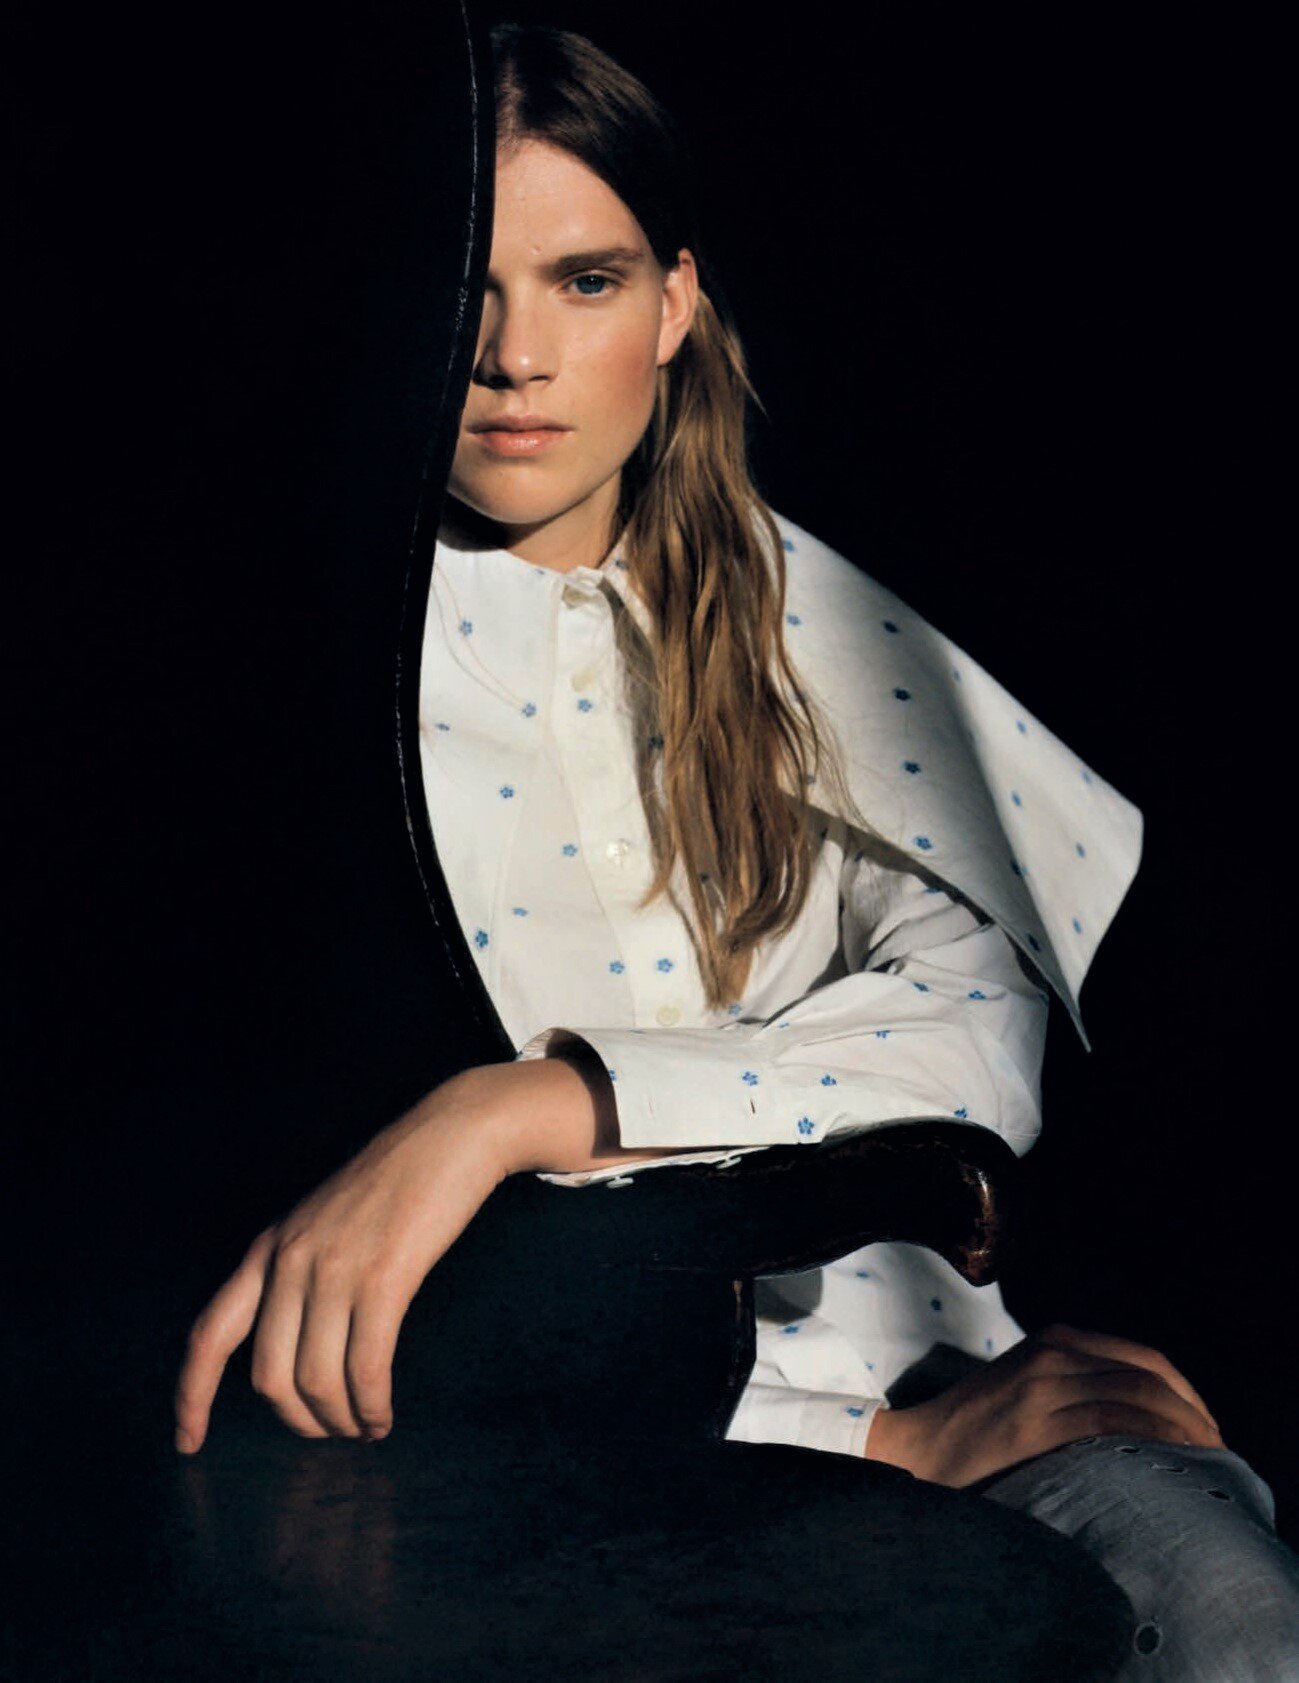 Ben Weller for Vogue Spain April 2020 (3).jpg